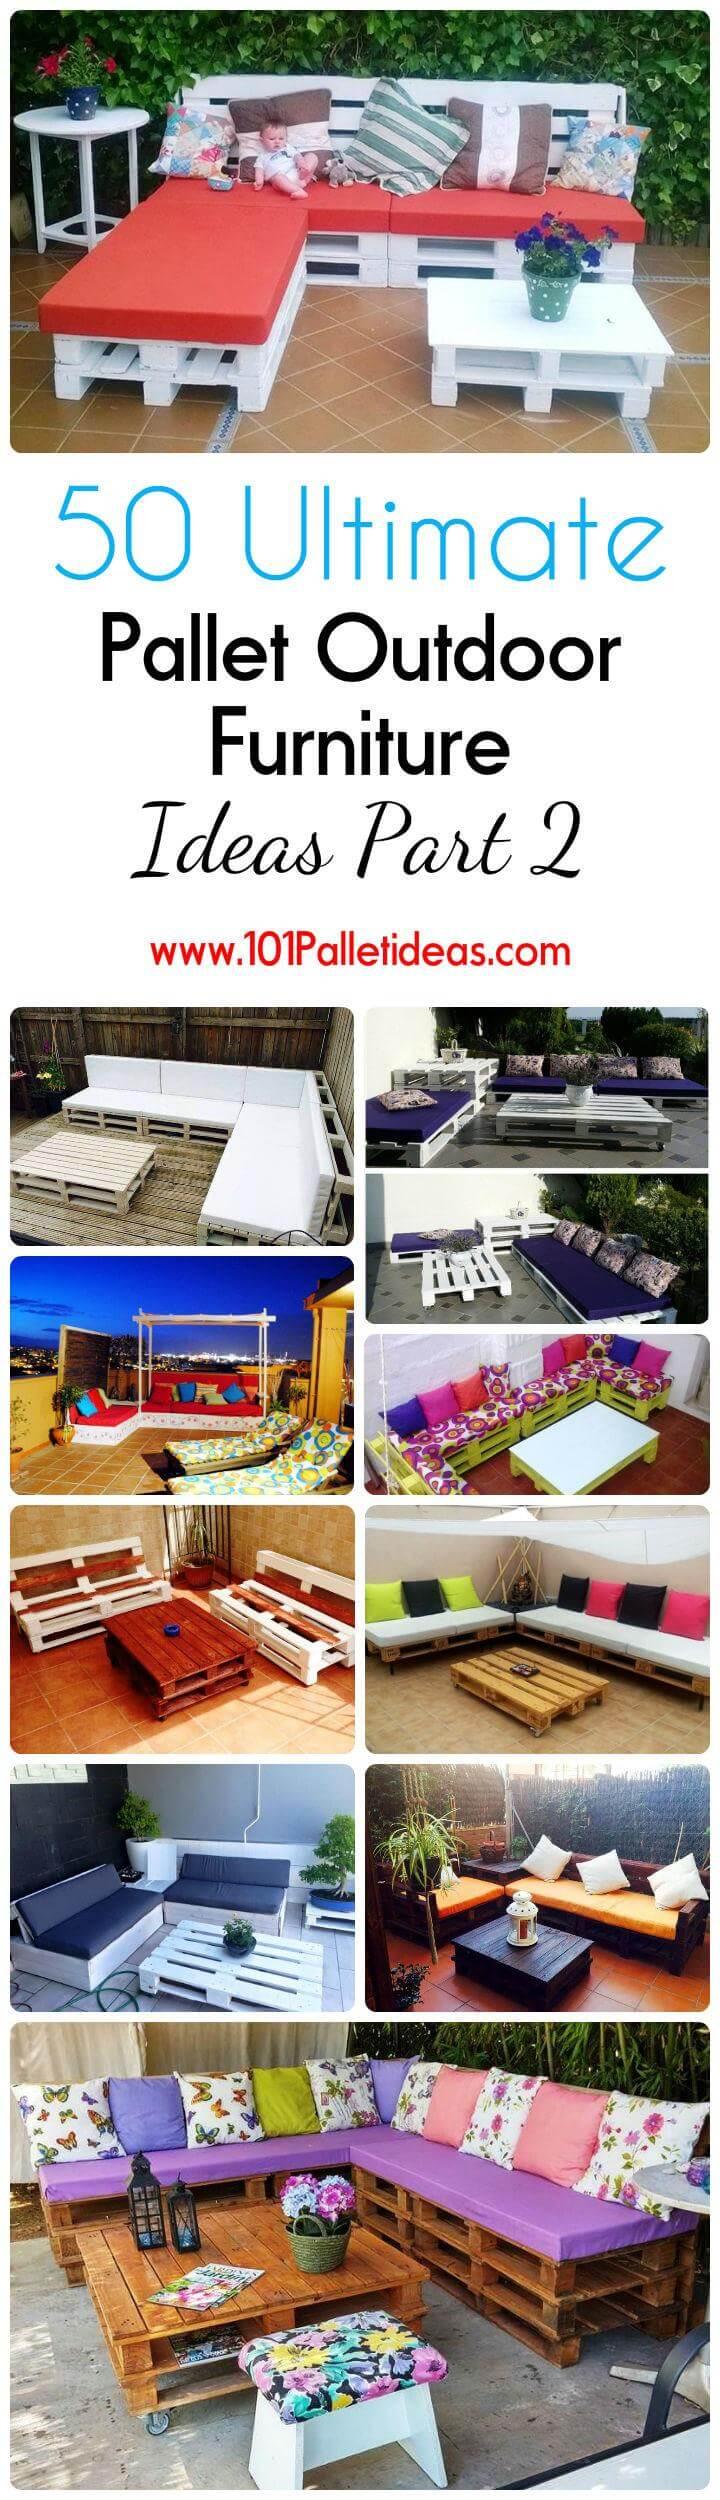 Pallet Outdoor Furniture Ideas